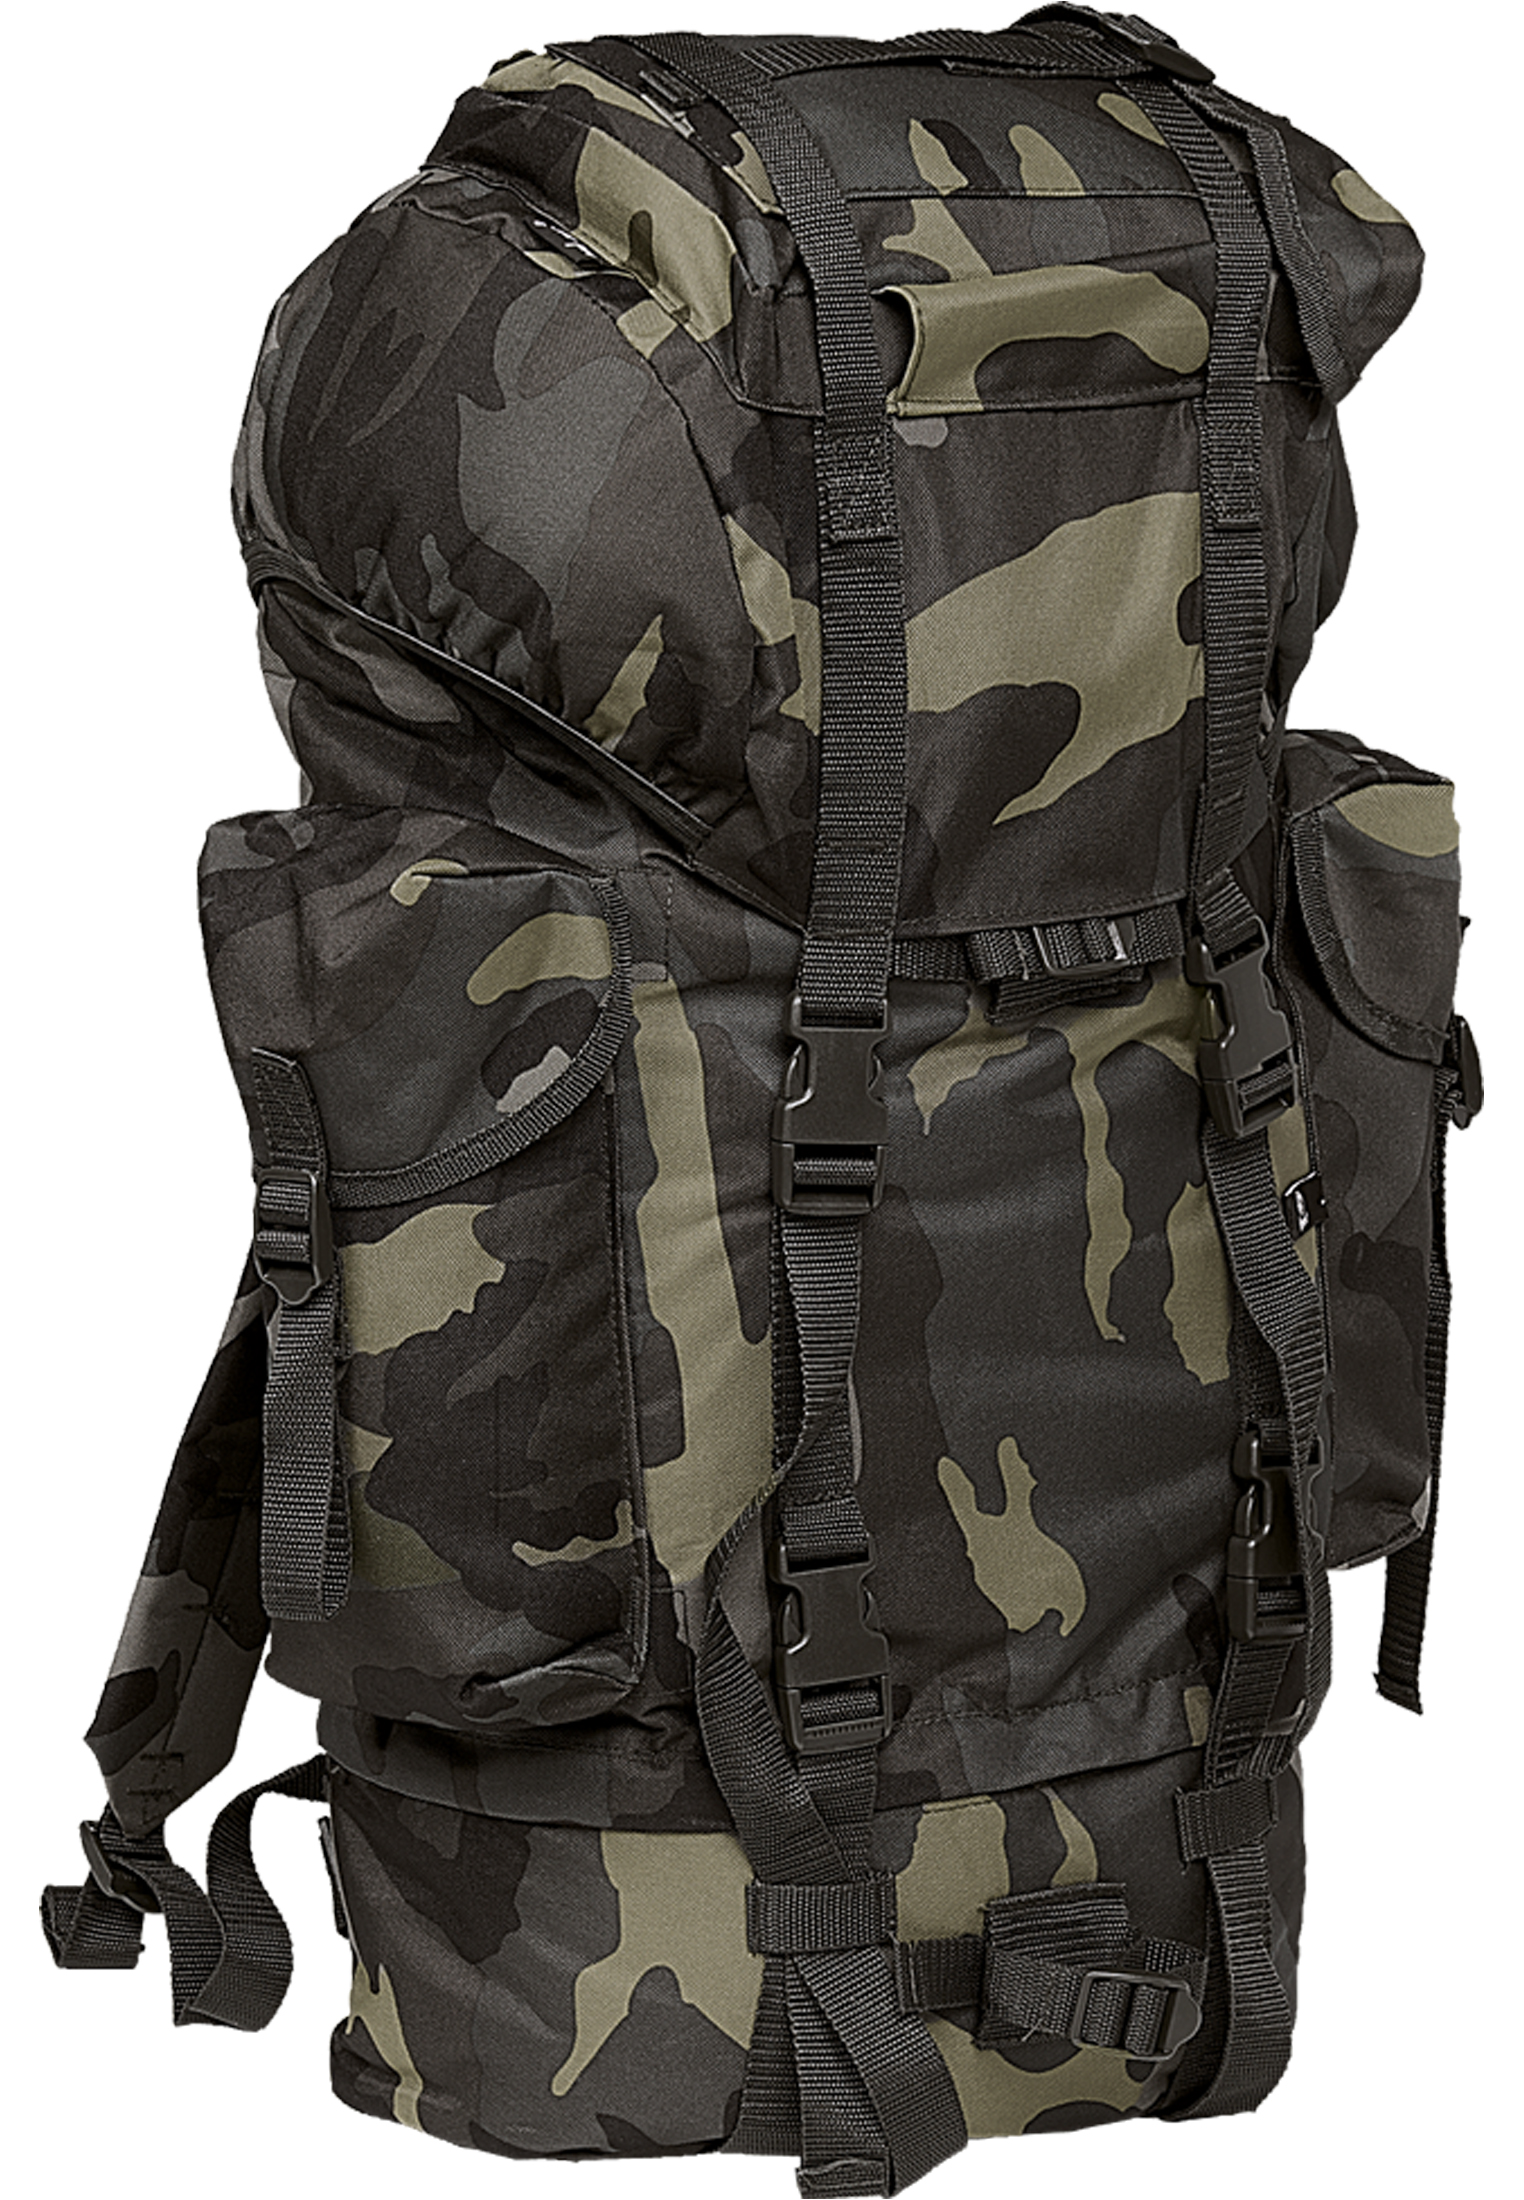 Nylon Military Darkcamo Backpack